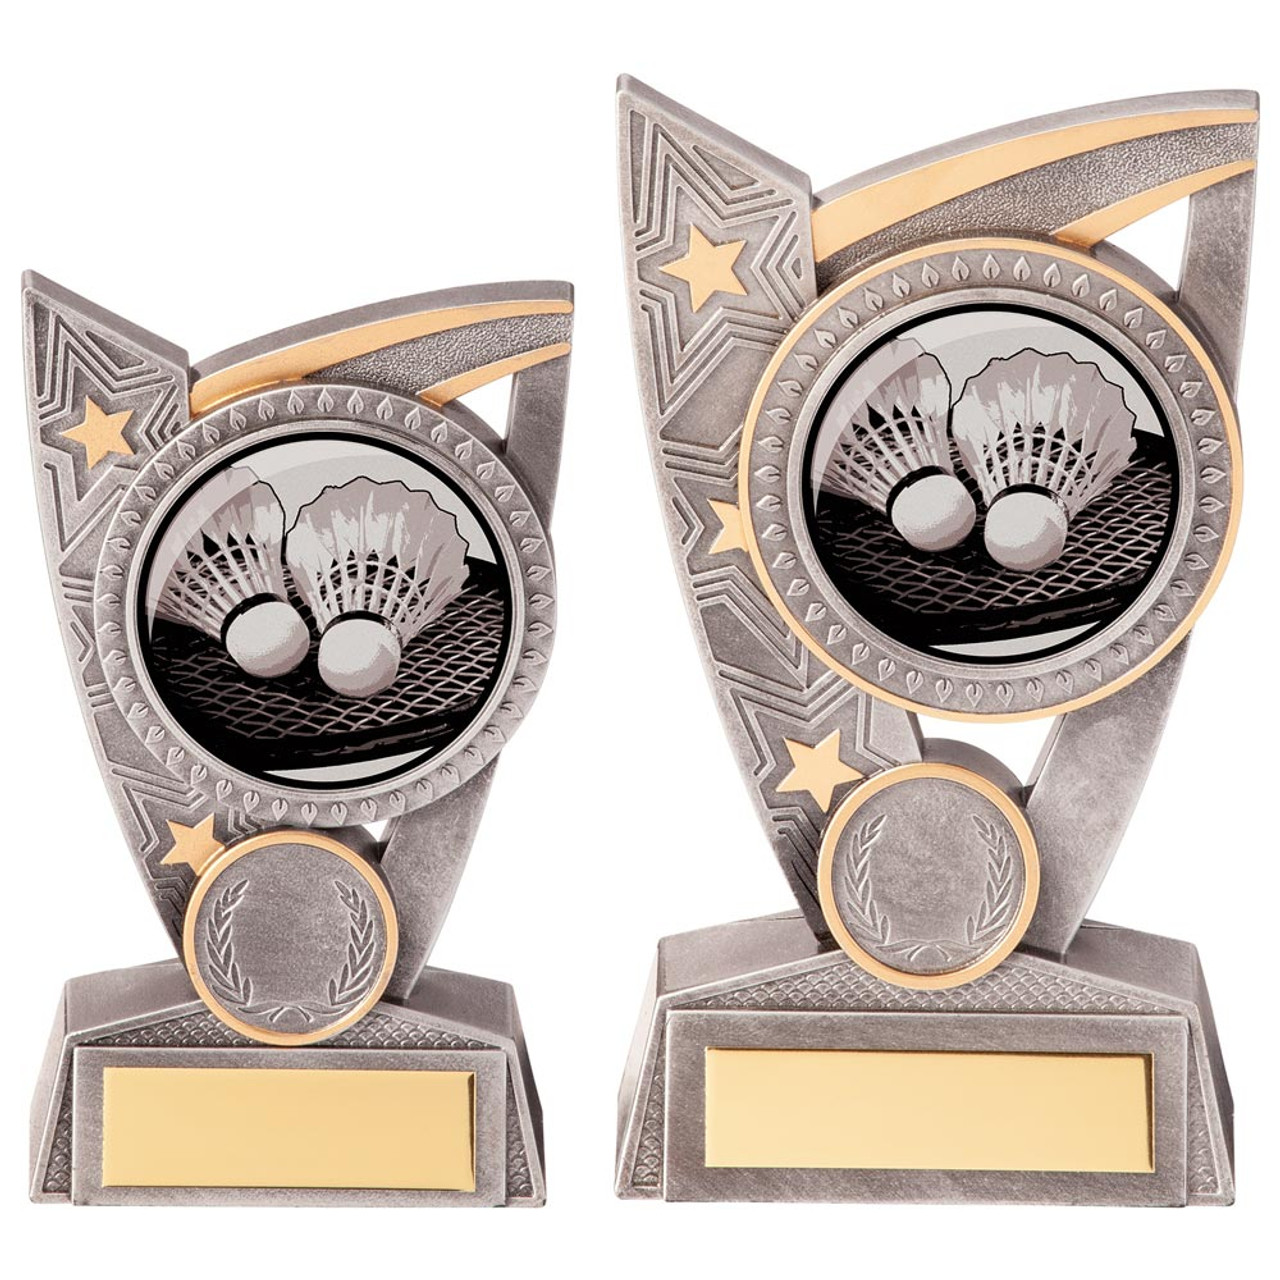 Badminton Silver & Gold Triumph Award in 2 Sizes 